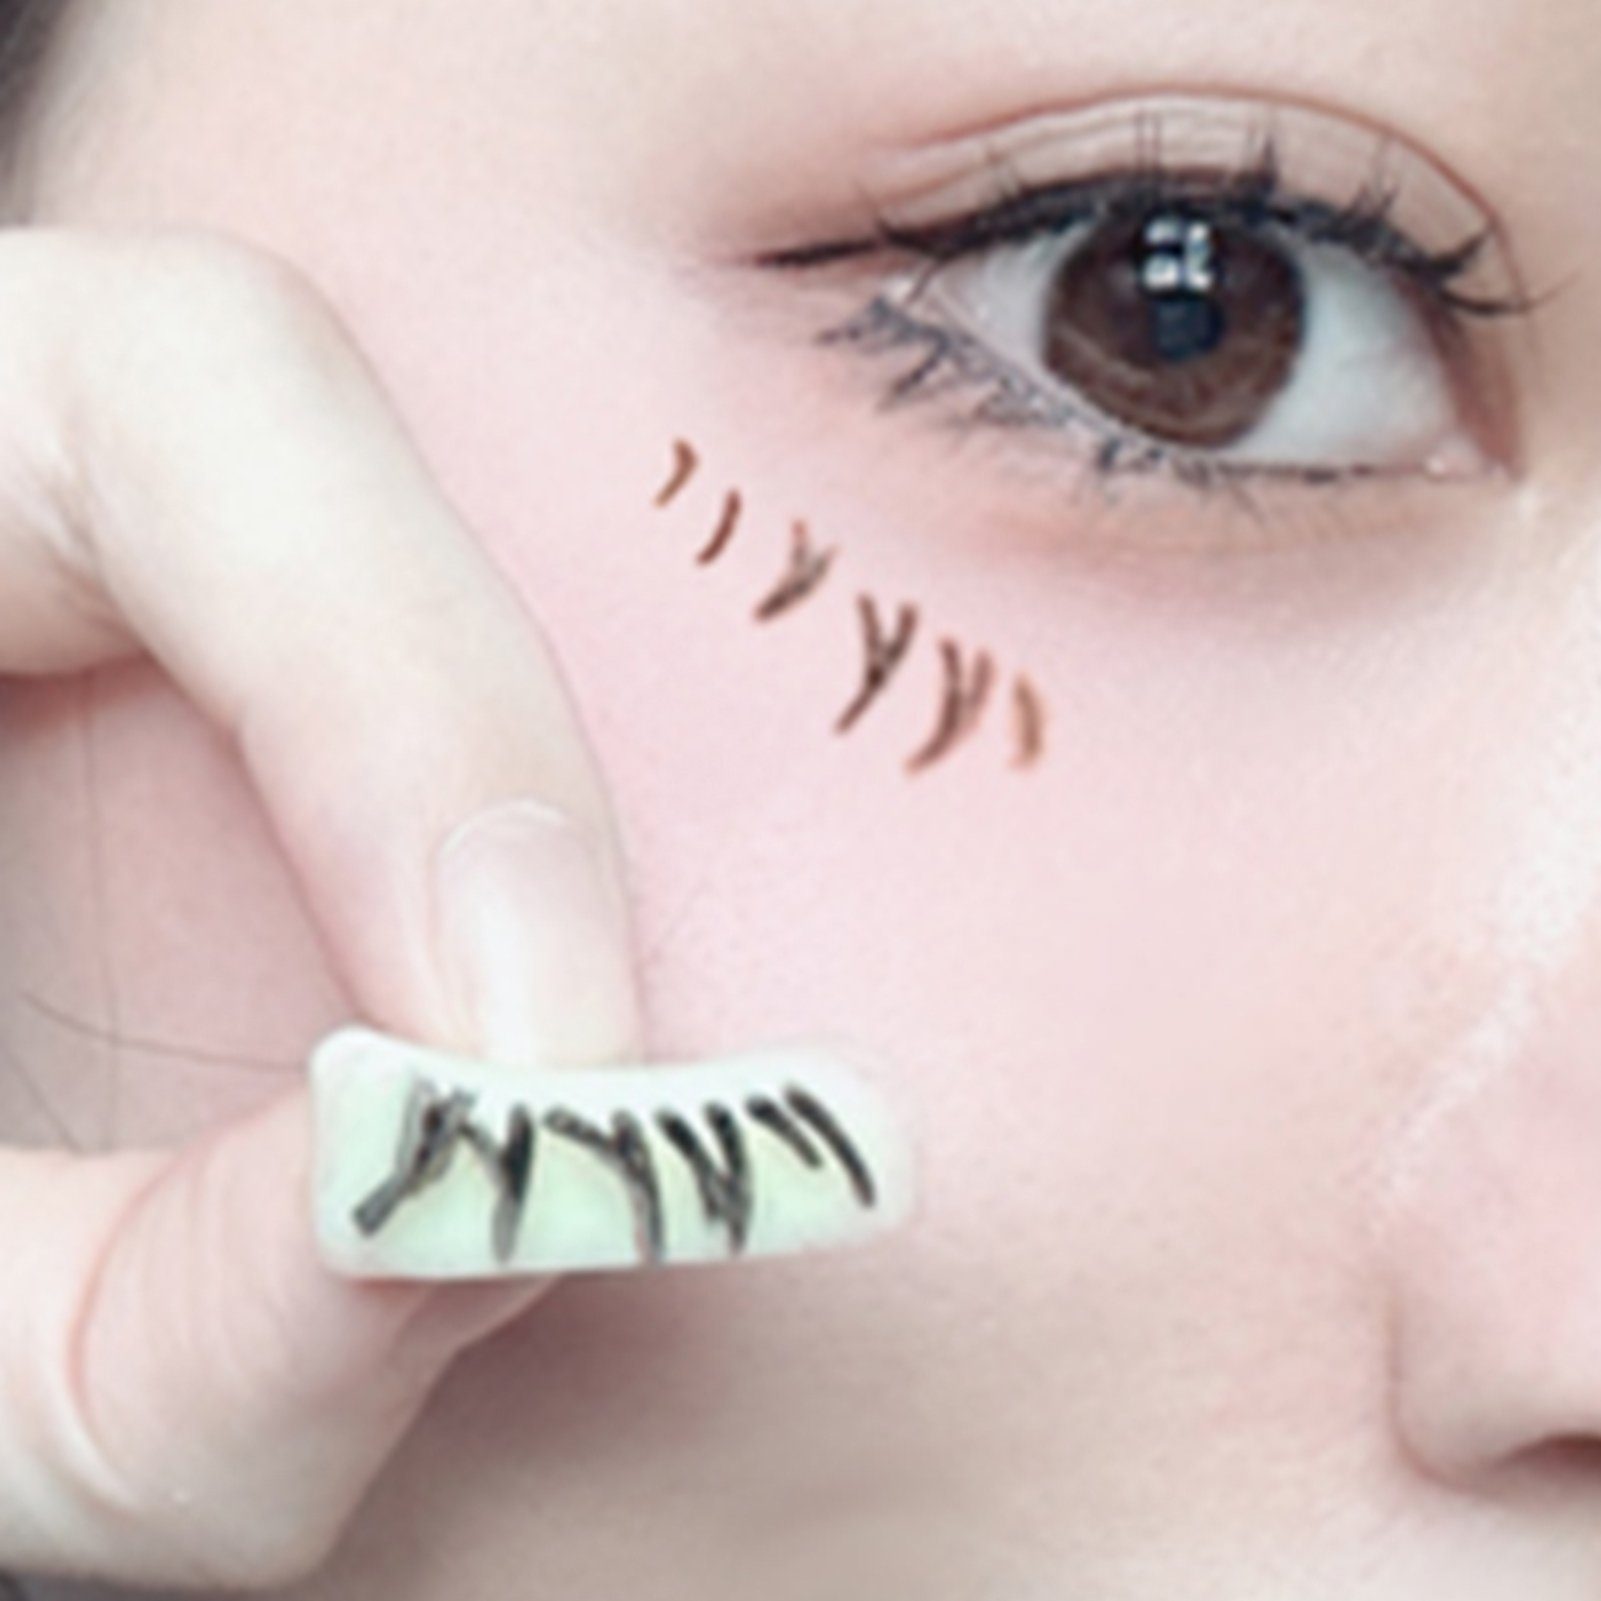 right Wimpern-Primer Blusmart Arbeitssparendes Augen-Make-up-Werkzeug Silikon-Wimpernform-Signets, eye